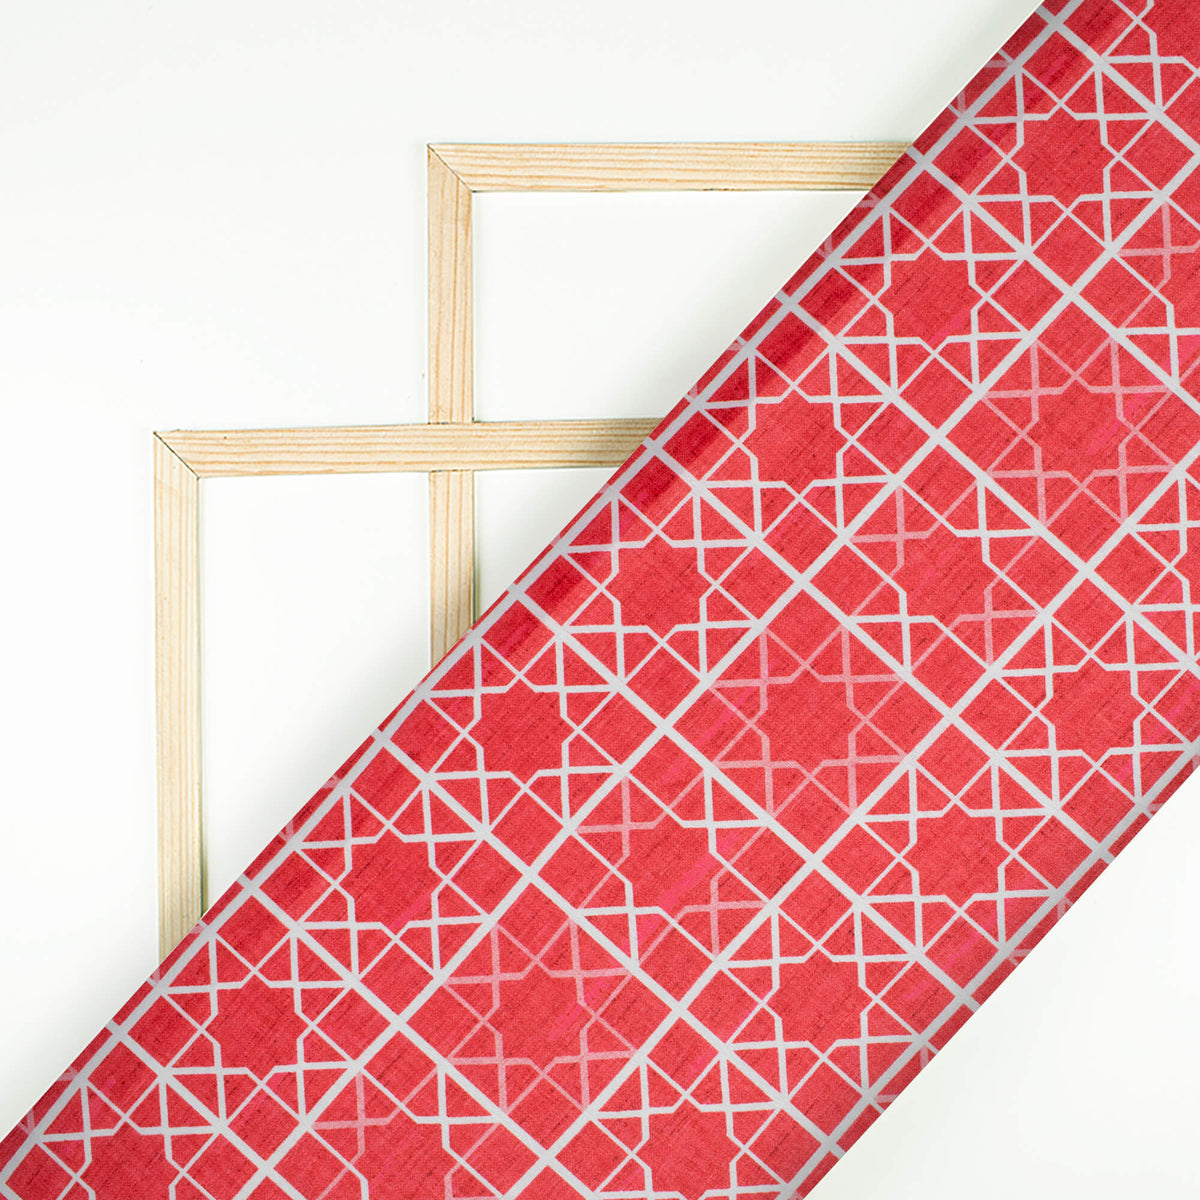 Cerise Pink And White Geometric Pattern Digital Print Lush Satin Fabric